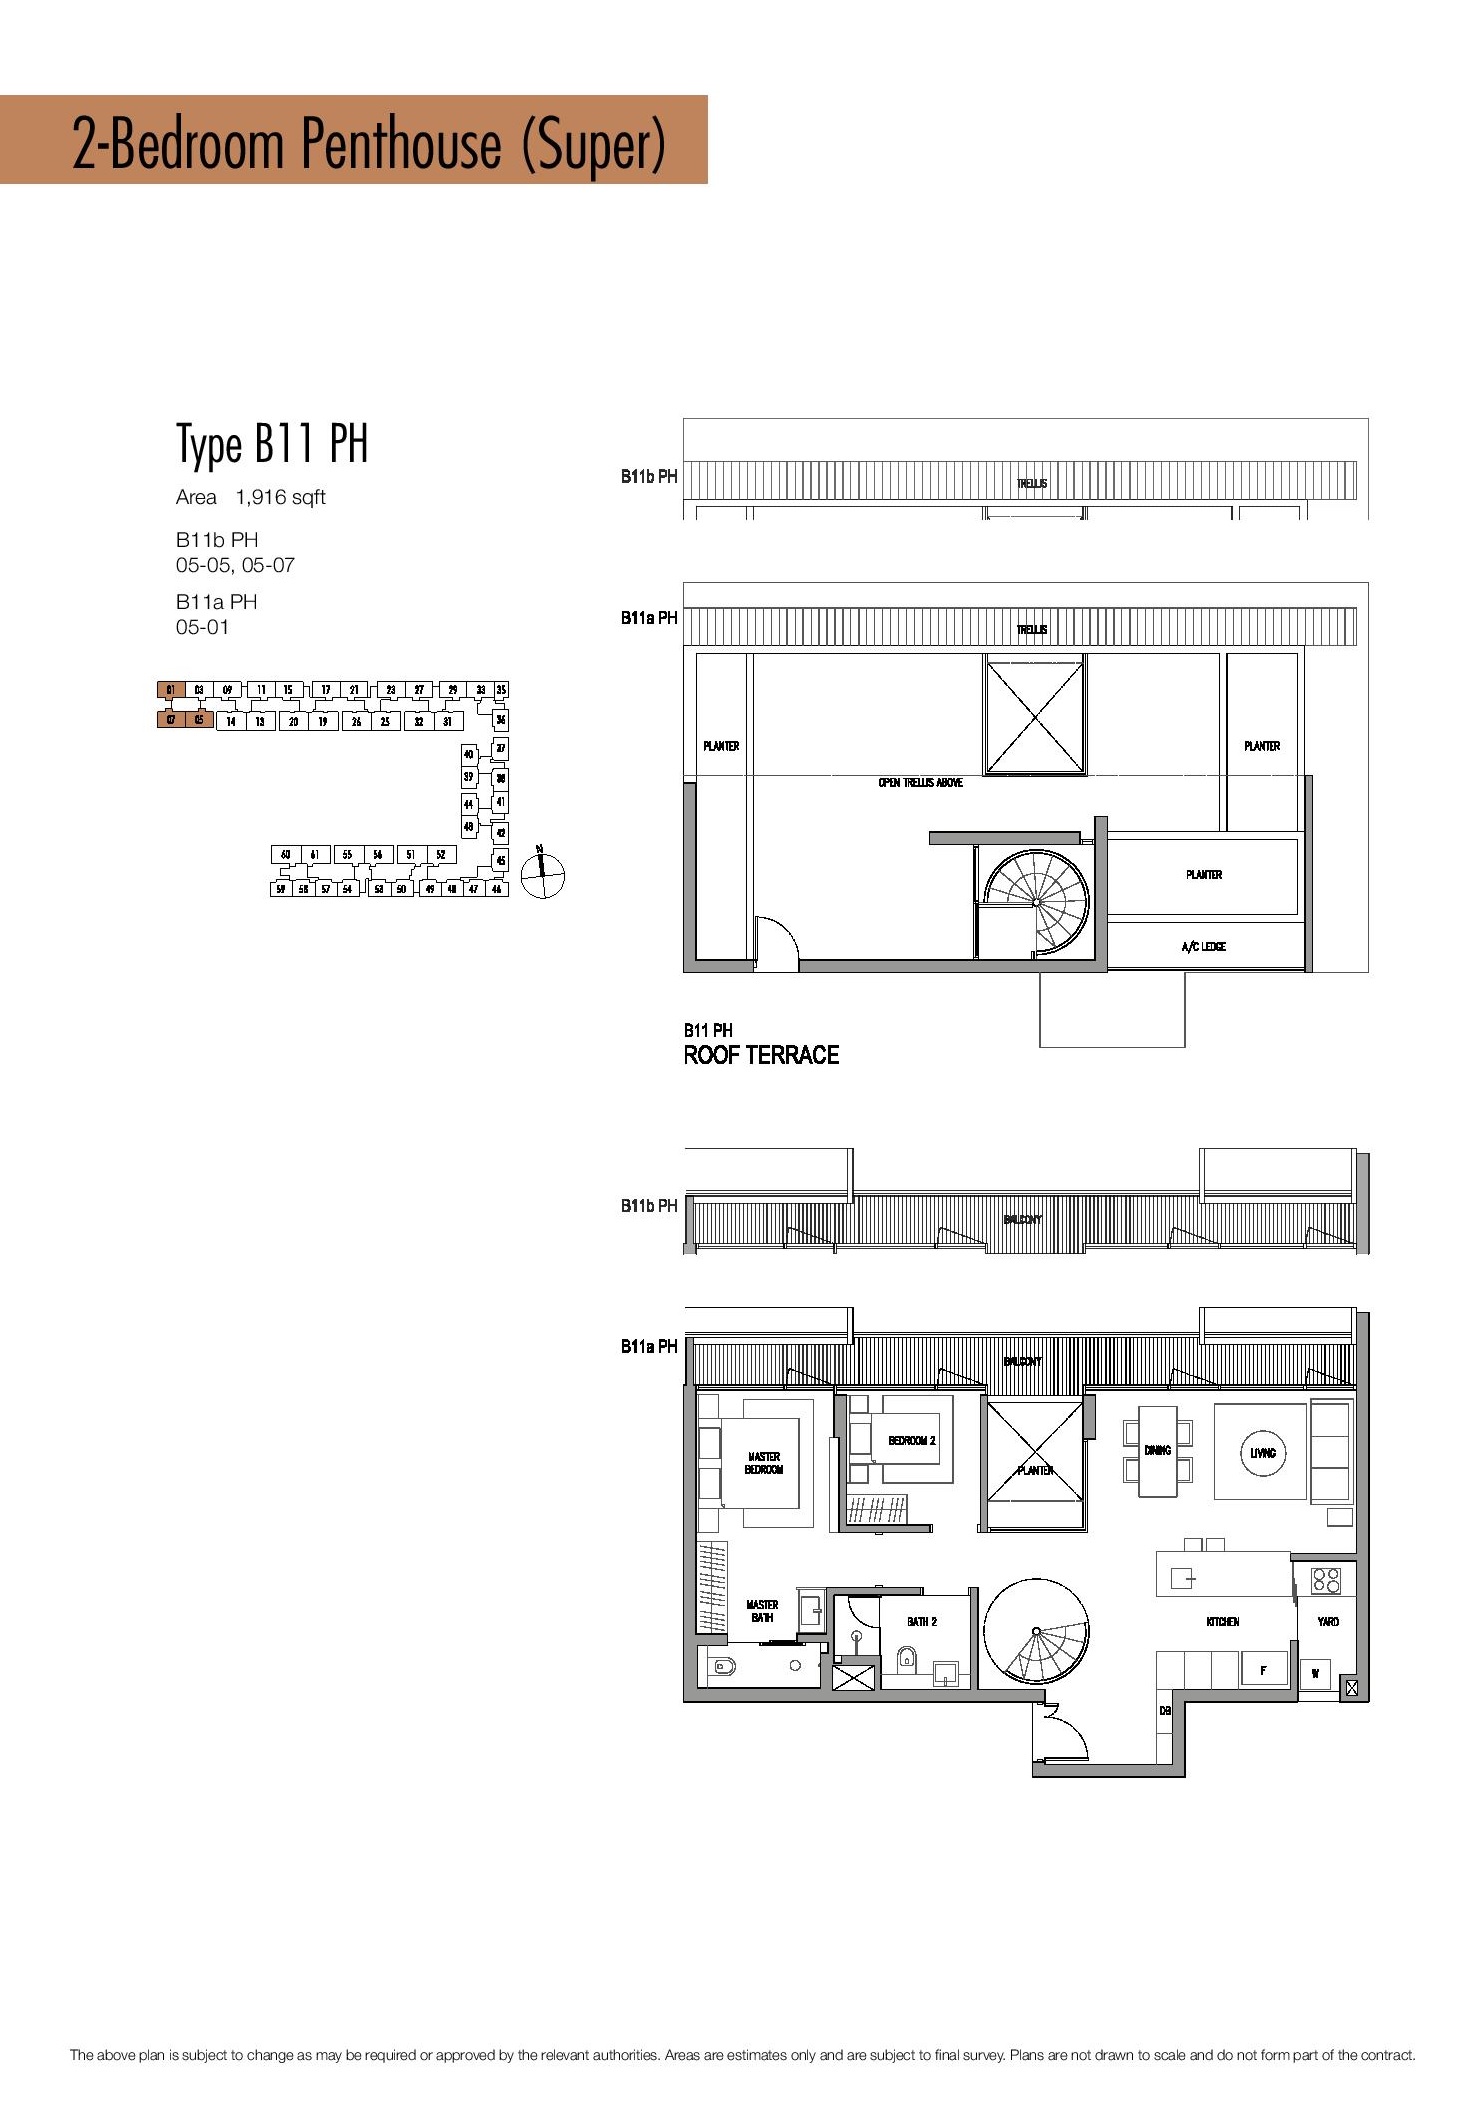 Seletar Park Residence 2 Bedroom Penthouse Type B11 PH Floor Plans